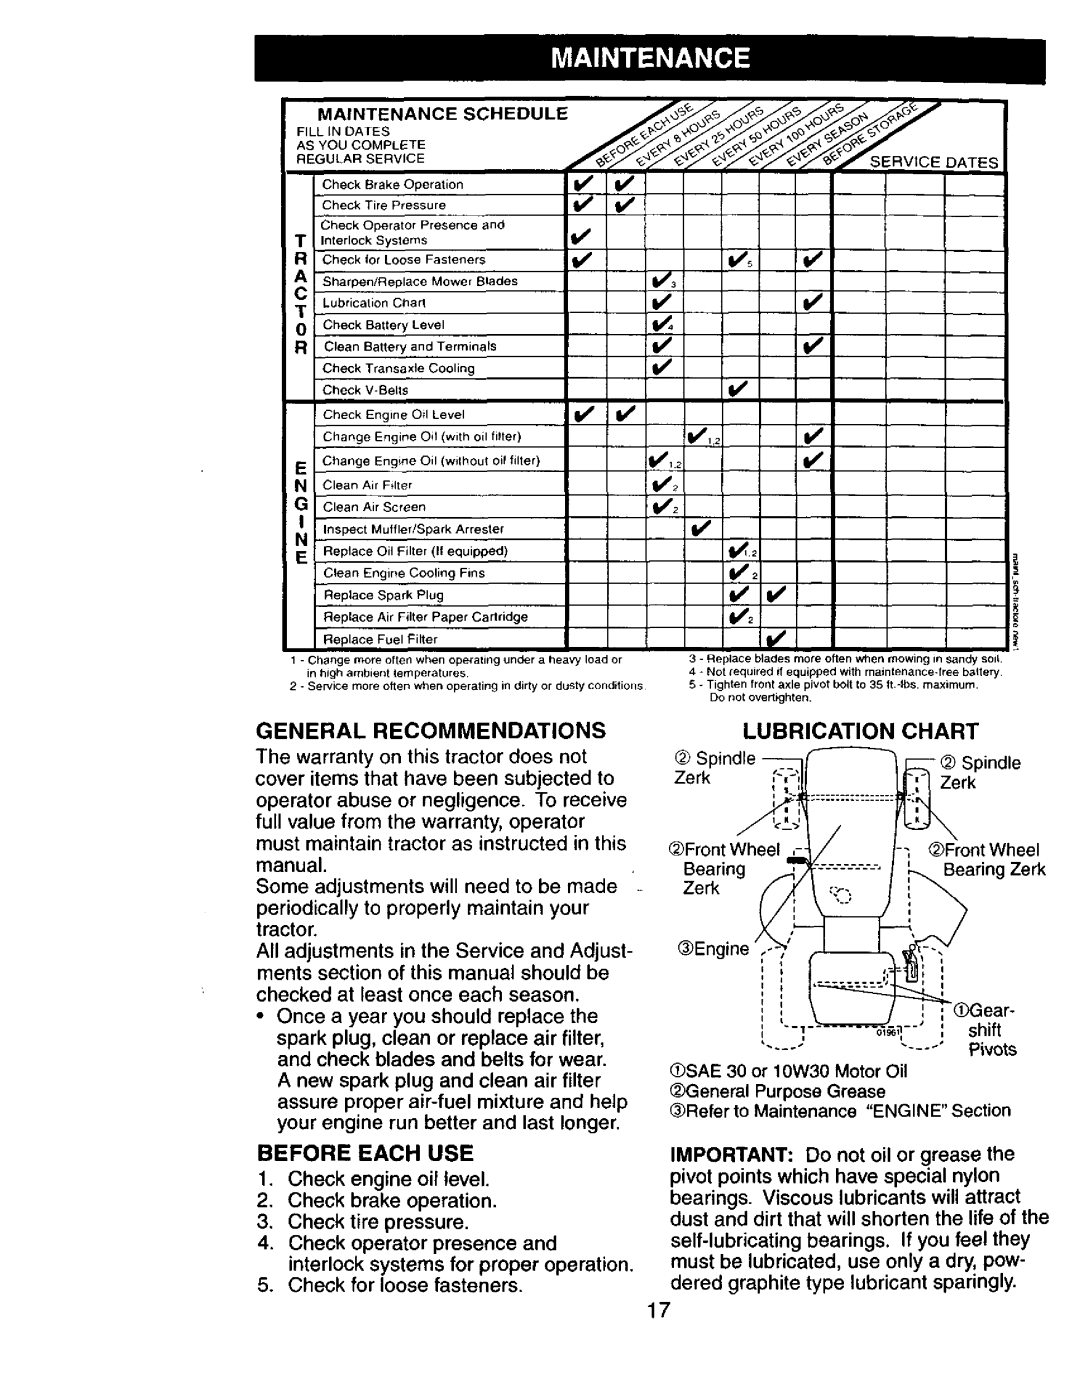 Craftsman 917272673 owner manual ChockBrakeOpert,on, General Recommendations, Lubrication Chart 